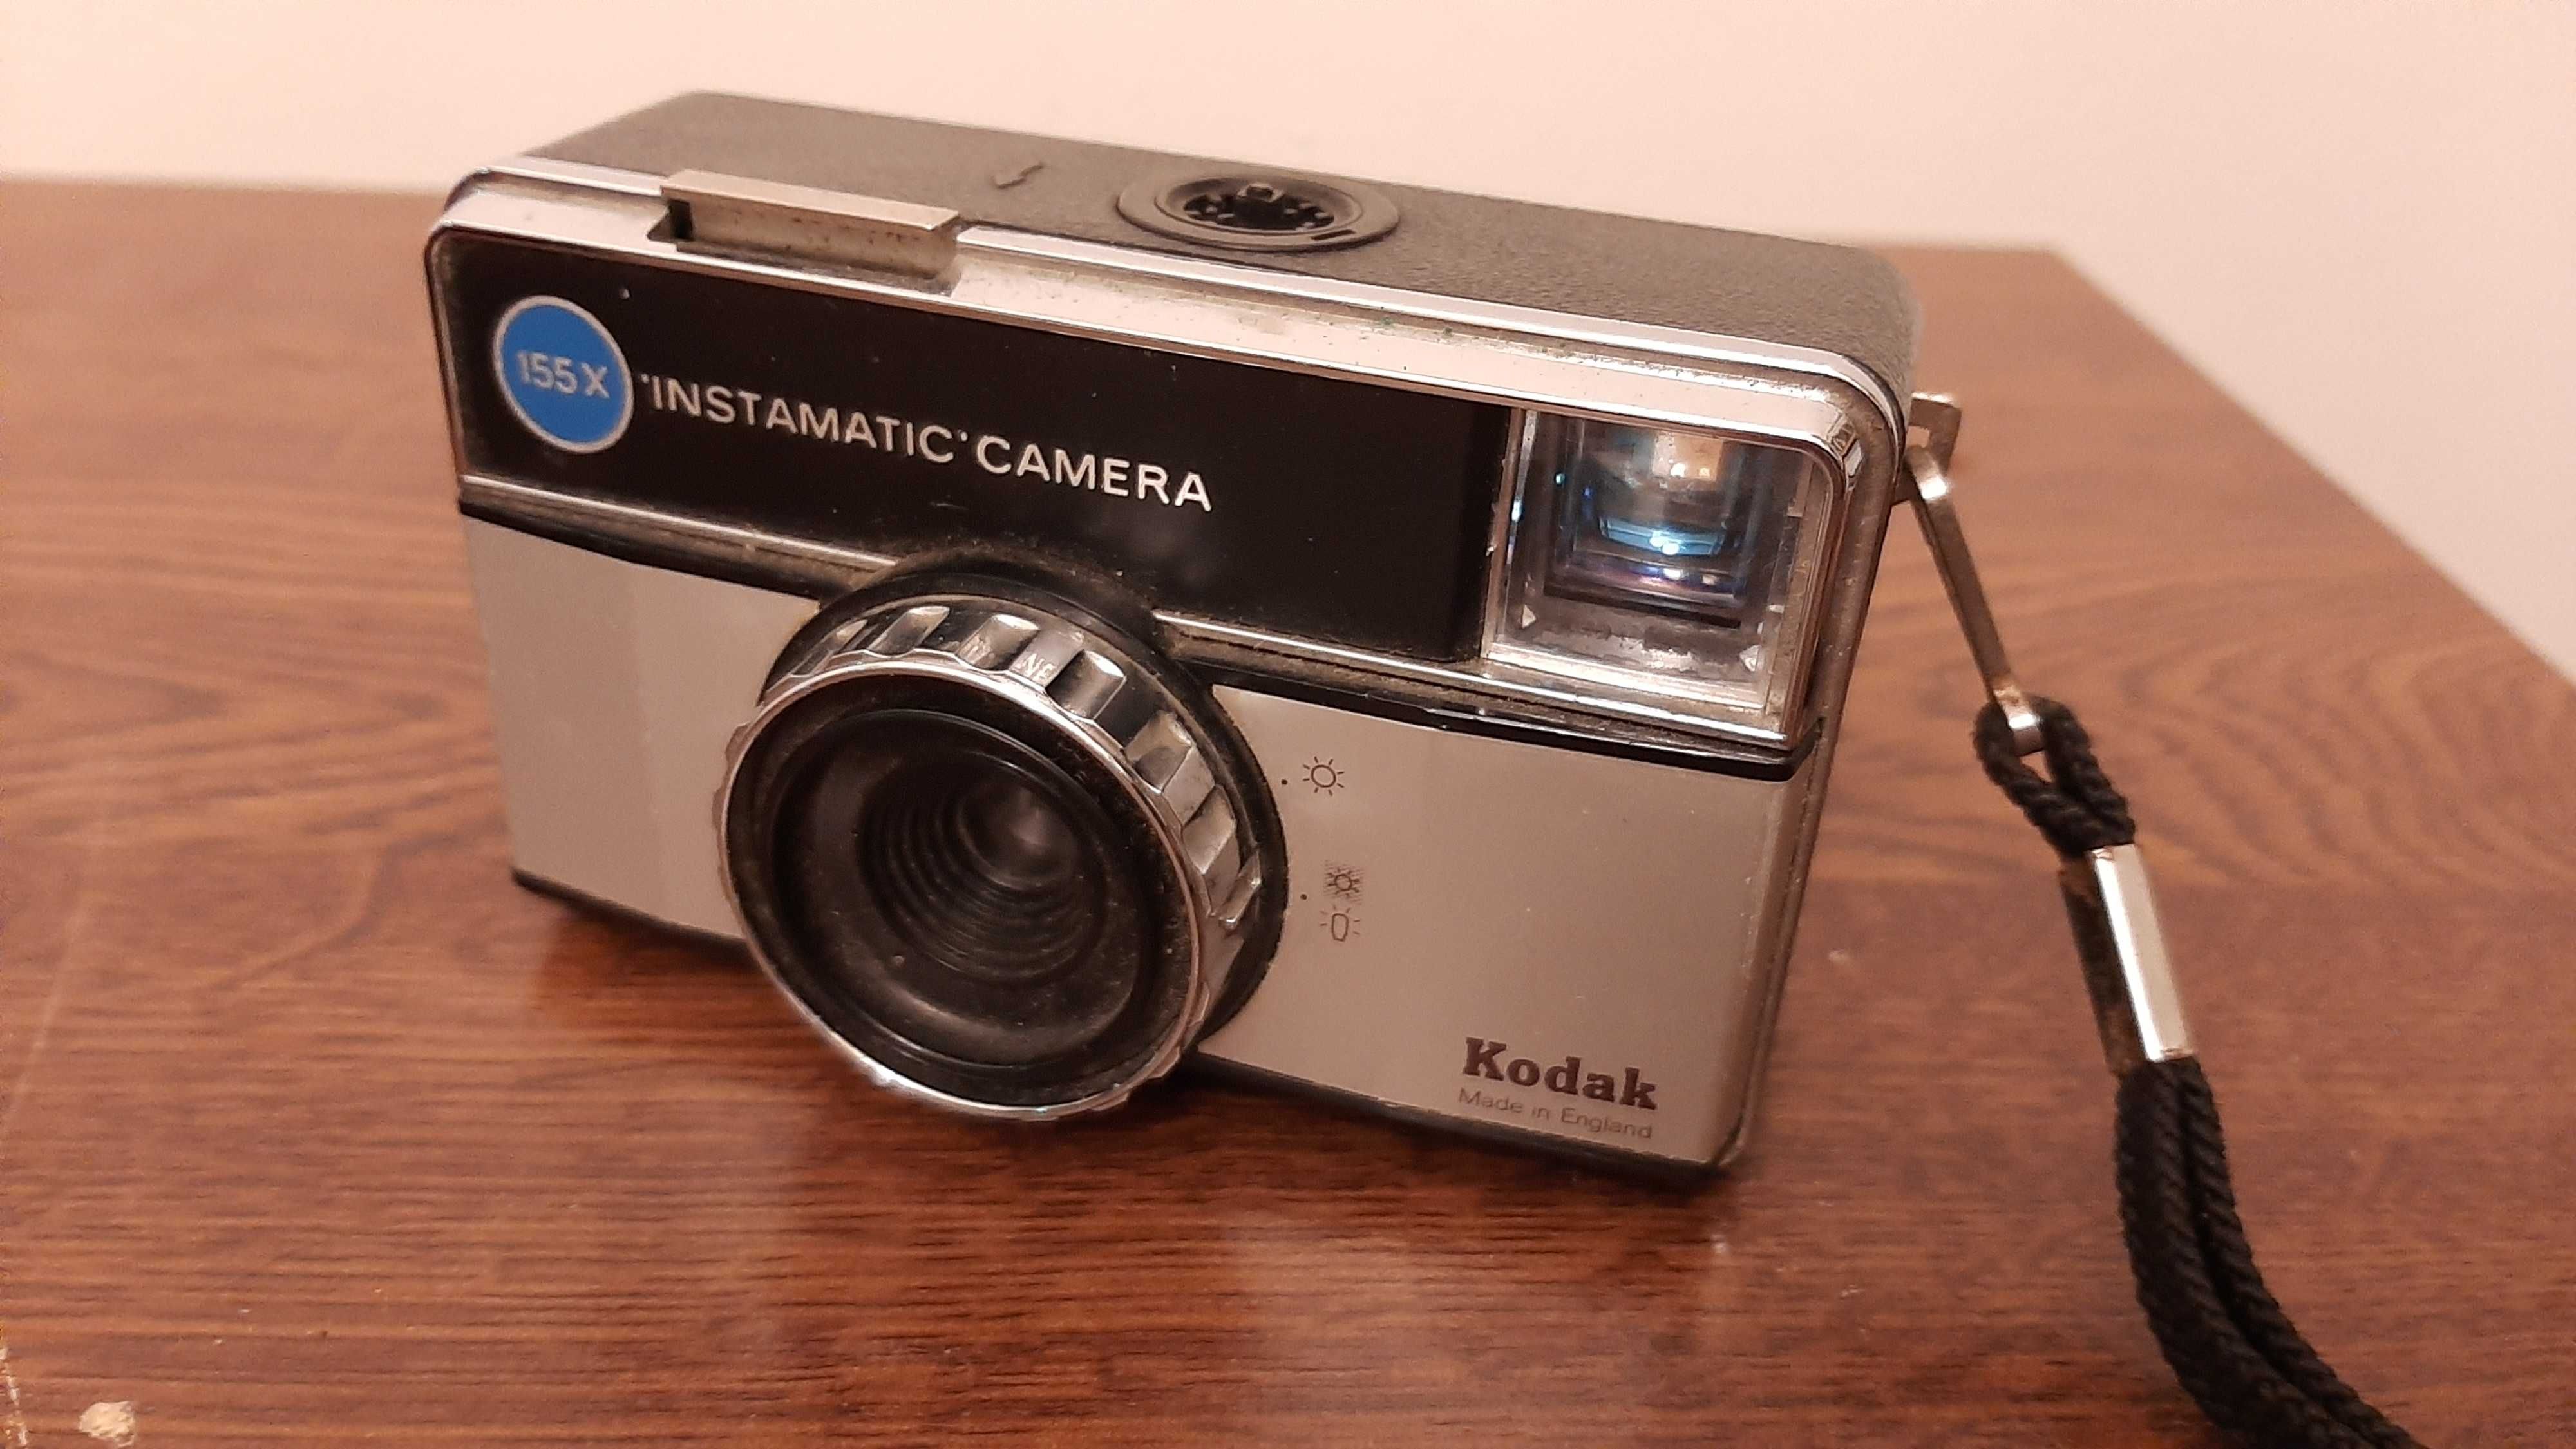 Máquina Fotográfica Kodak Instamatic 155-X, vintage na caixa original